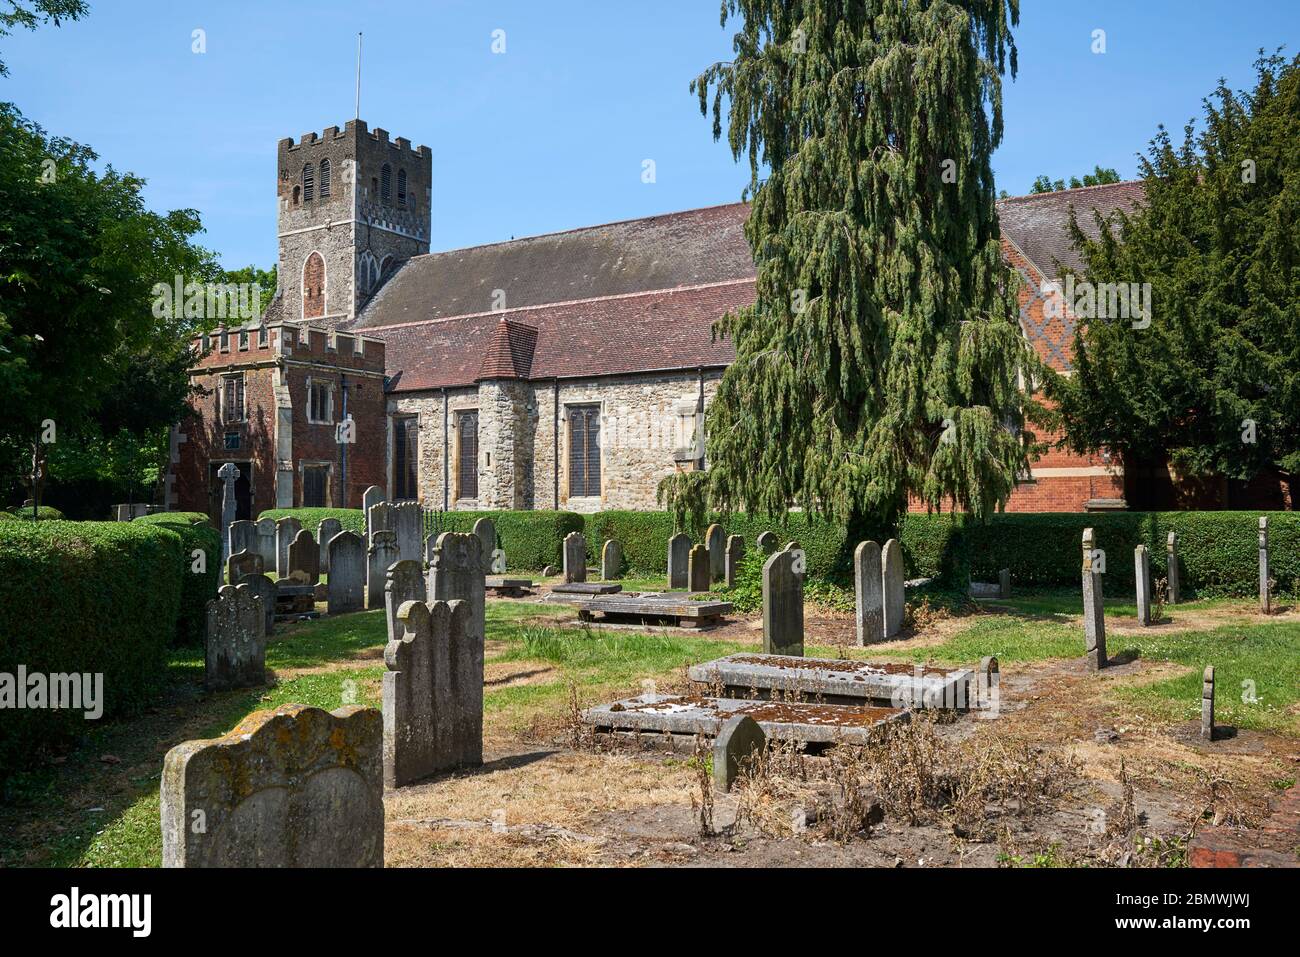 The historic parish church of All Hallows, Tottenham, North London N17 Stock Photo